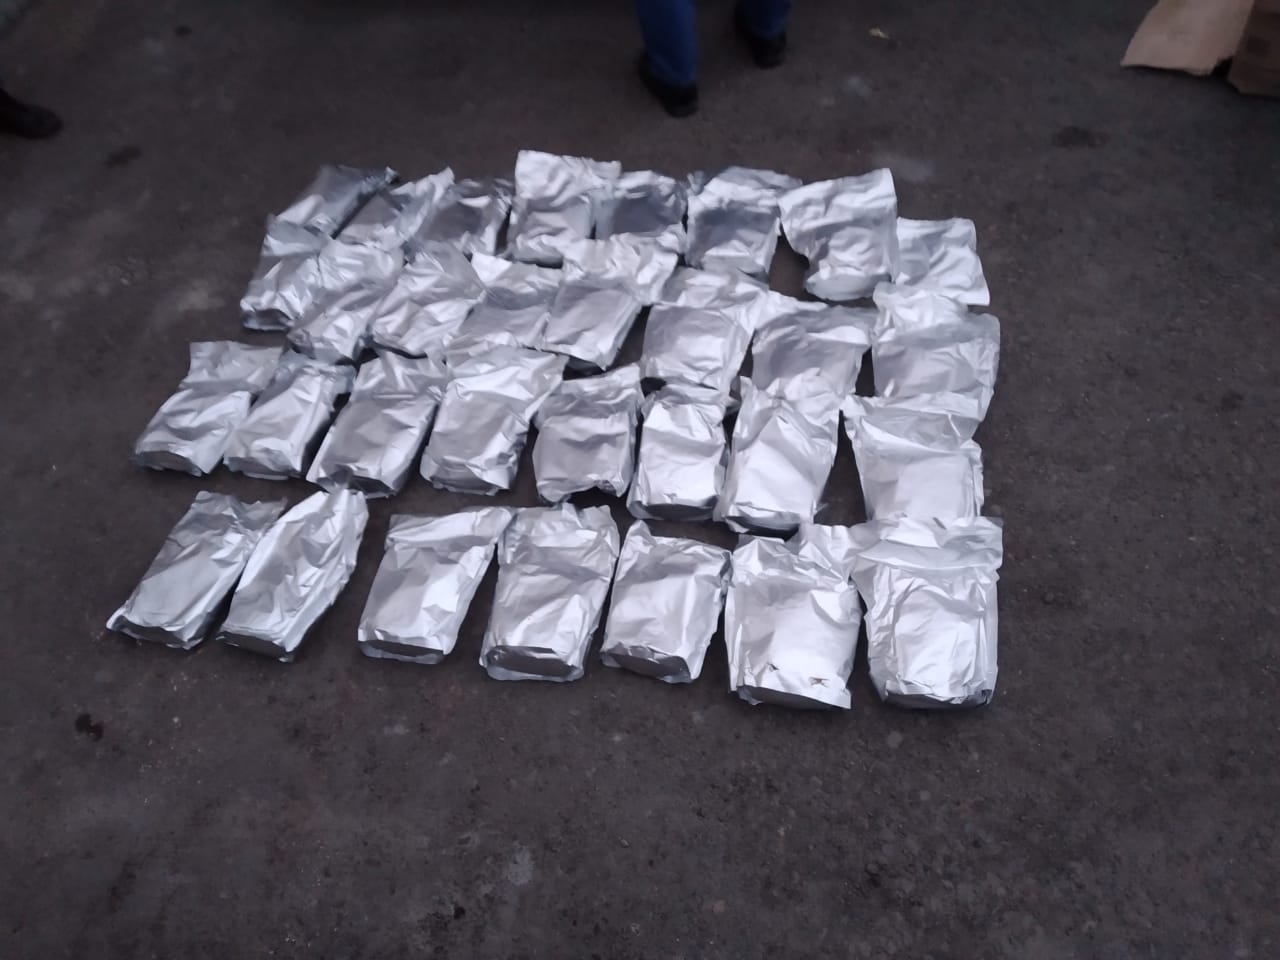 Спецназ ФСБ задержал наркоторговцев-оптовиков. Видео